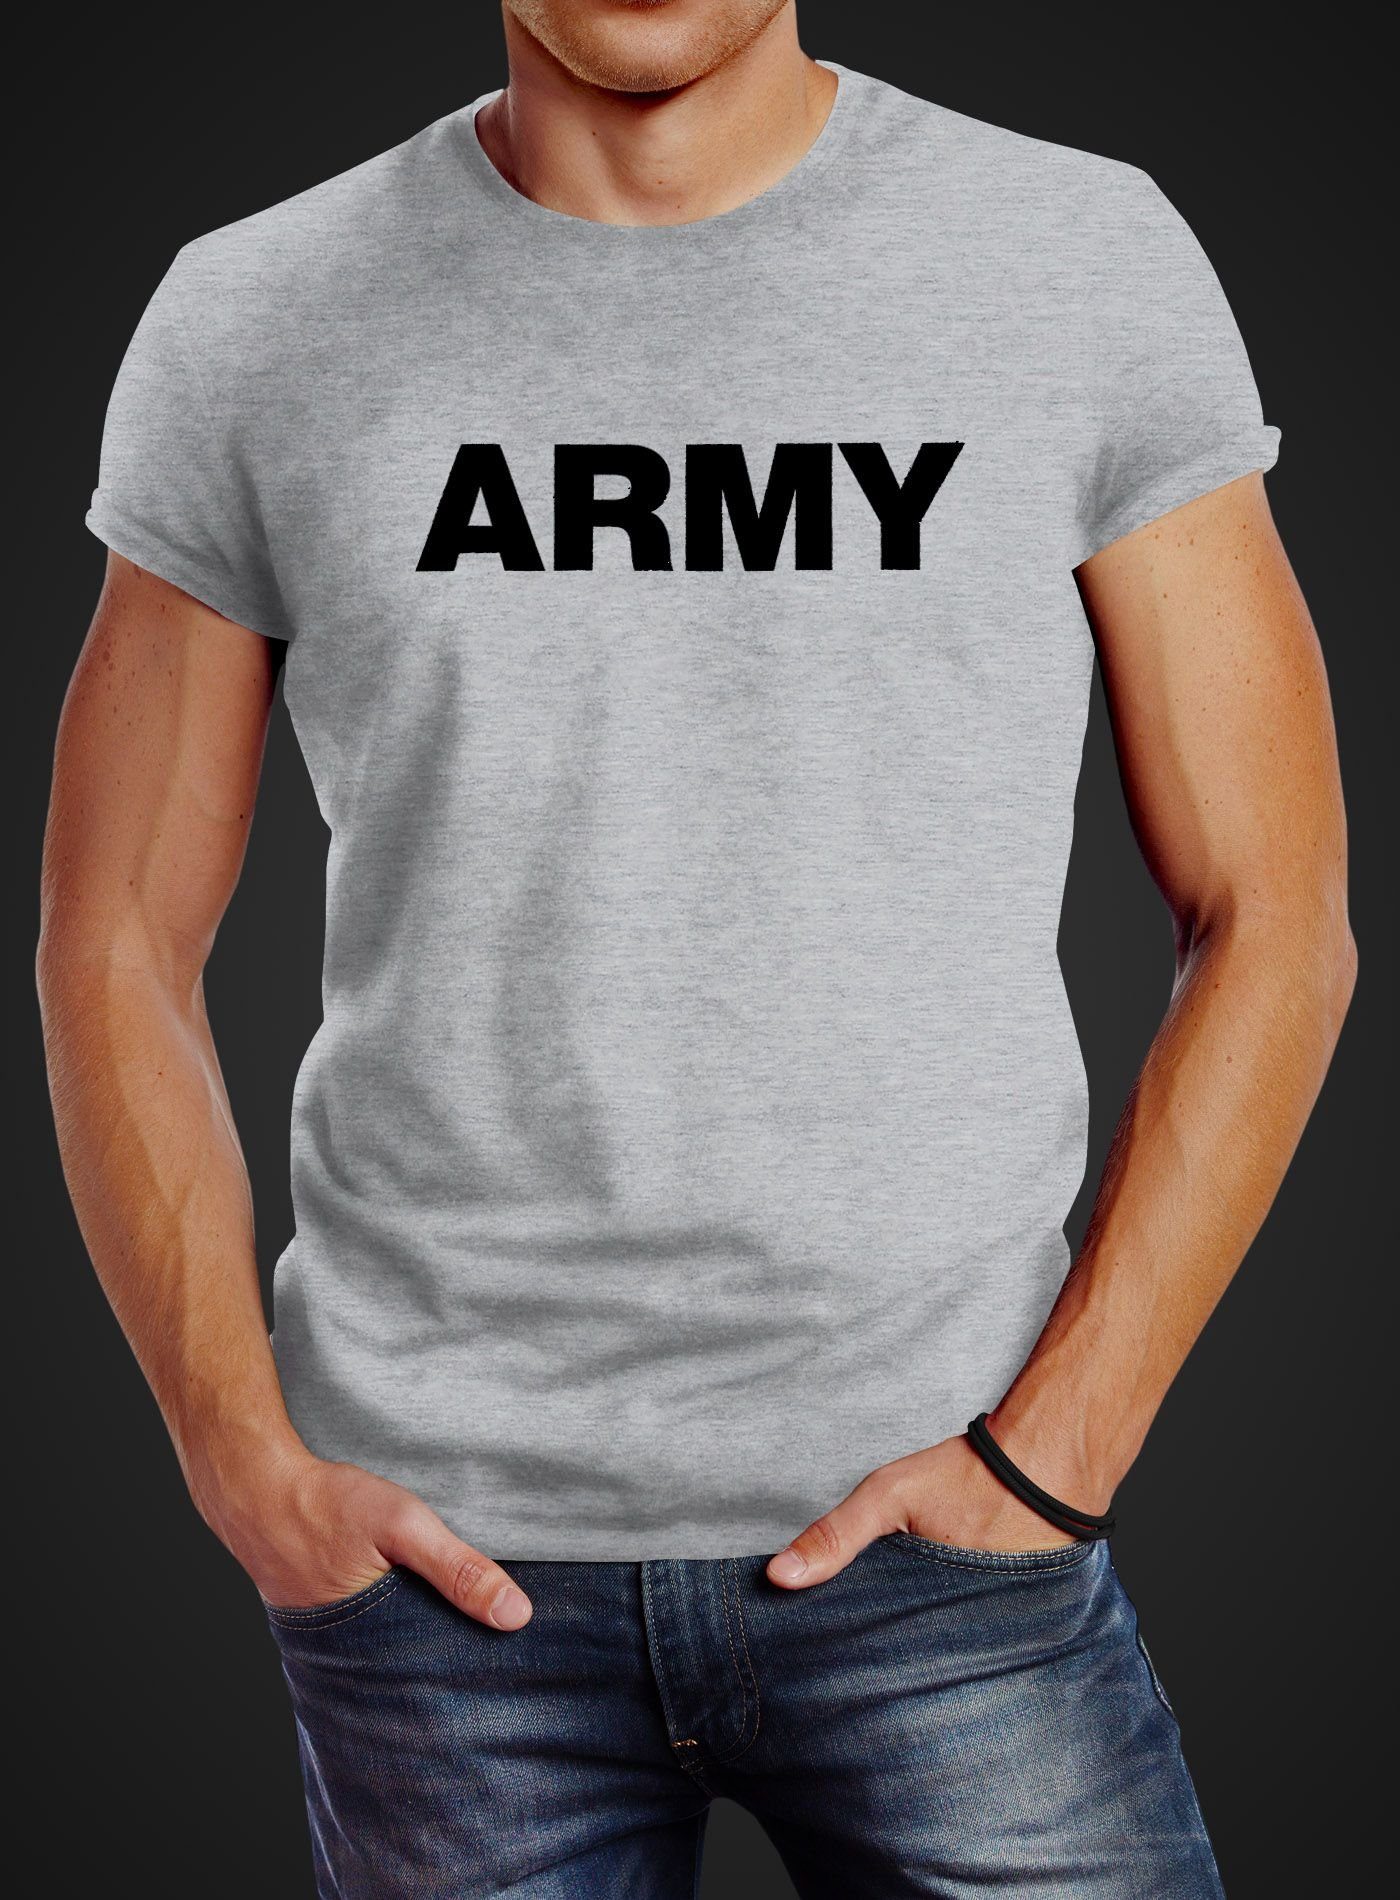 Herren Shirts Neverless Print-Shirt cooles Herren T-Shirt Aufdruck Army Print Fashion Streetstyle Neverless® mit Print